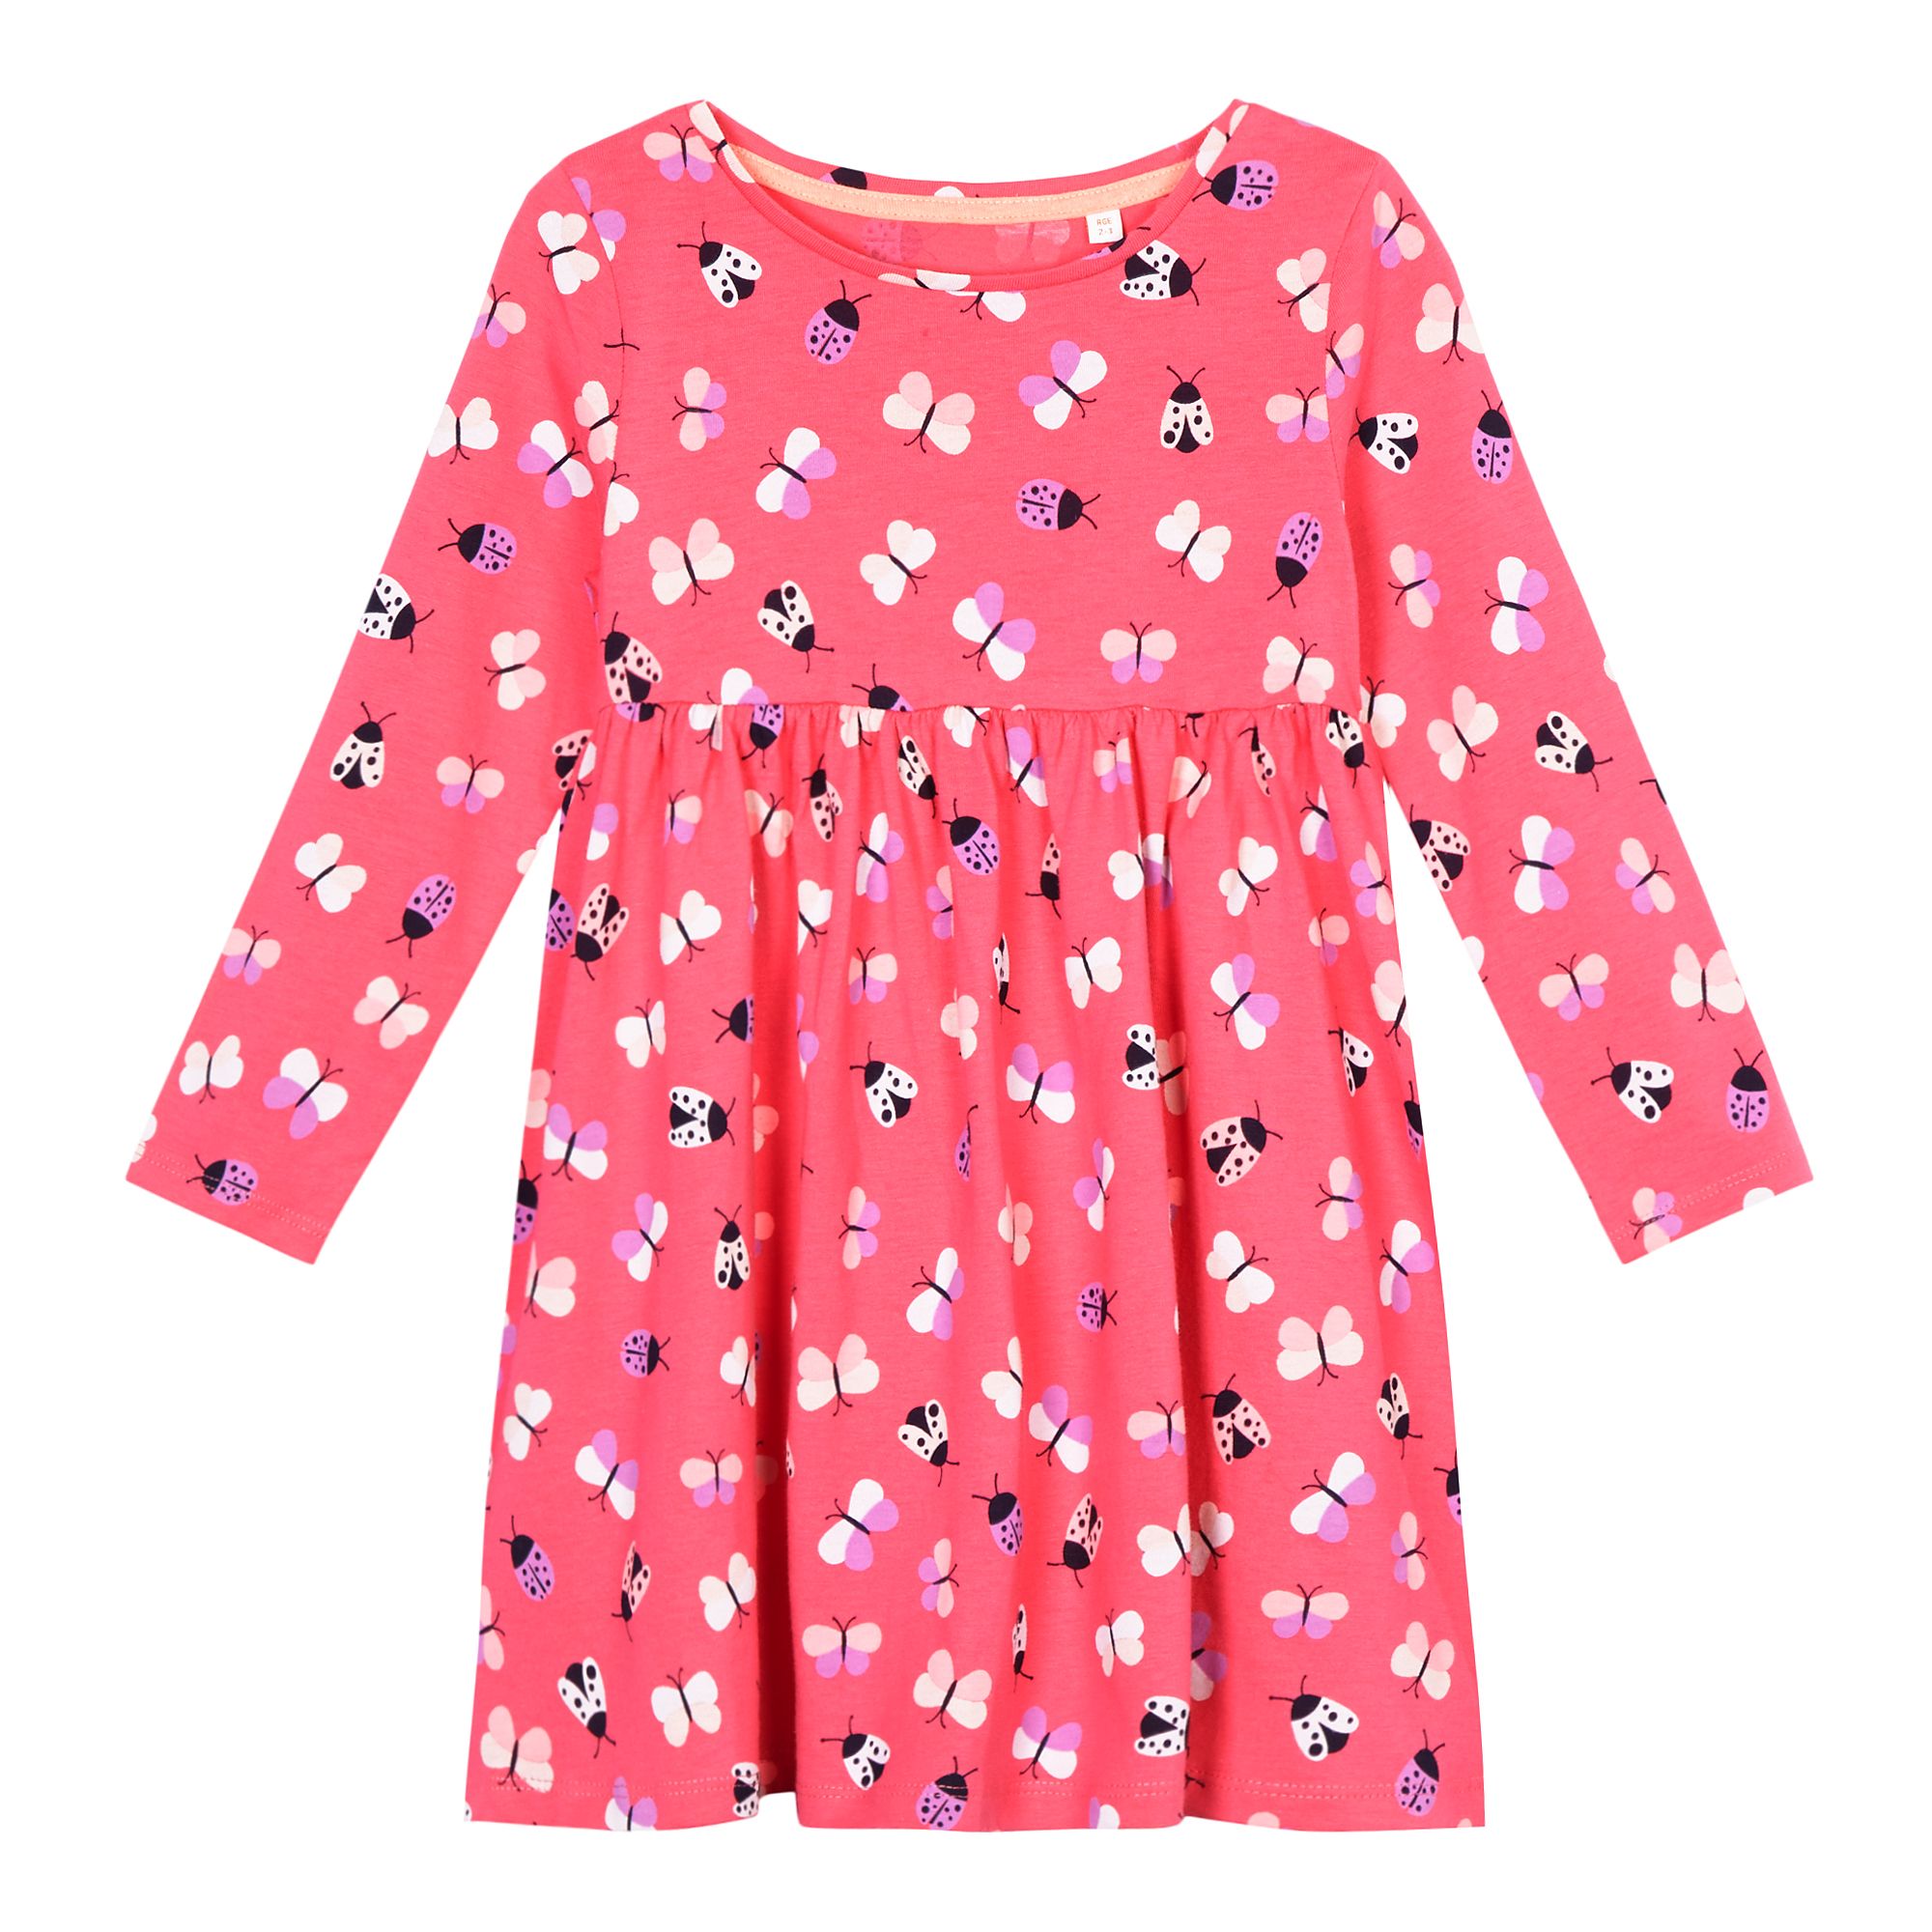 Bluezoo Kids Girls' Pink Ladybird Print Dress From Debenhams | eBay